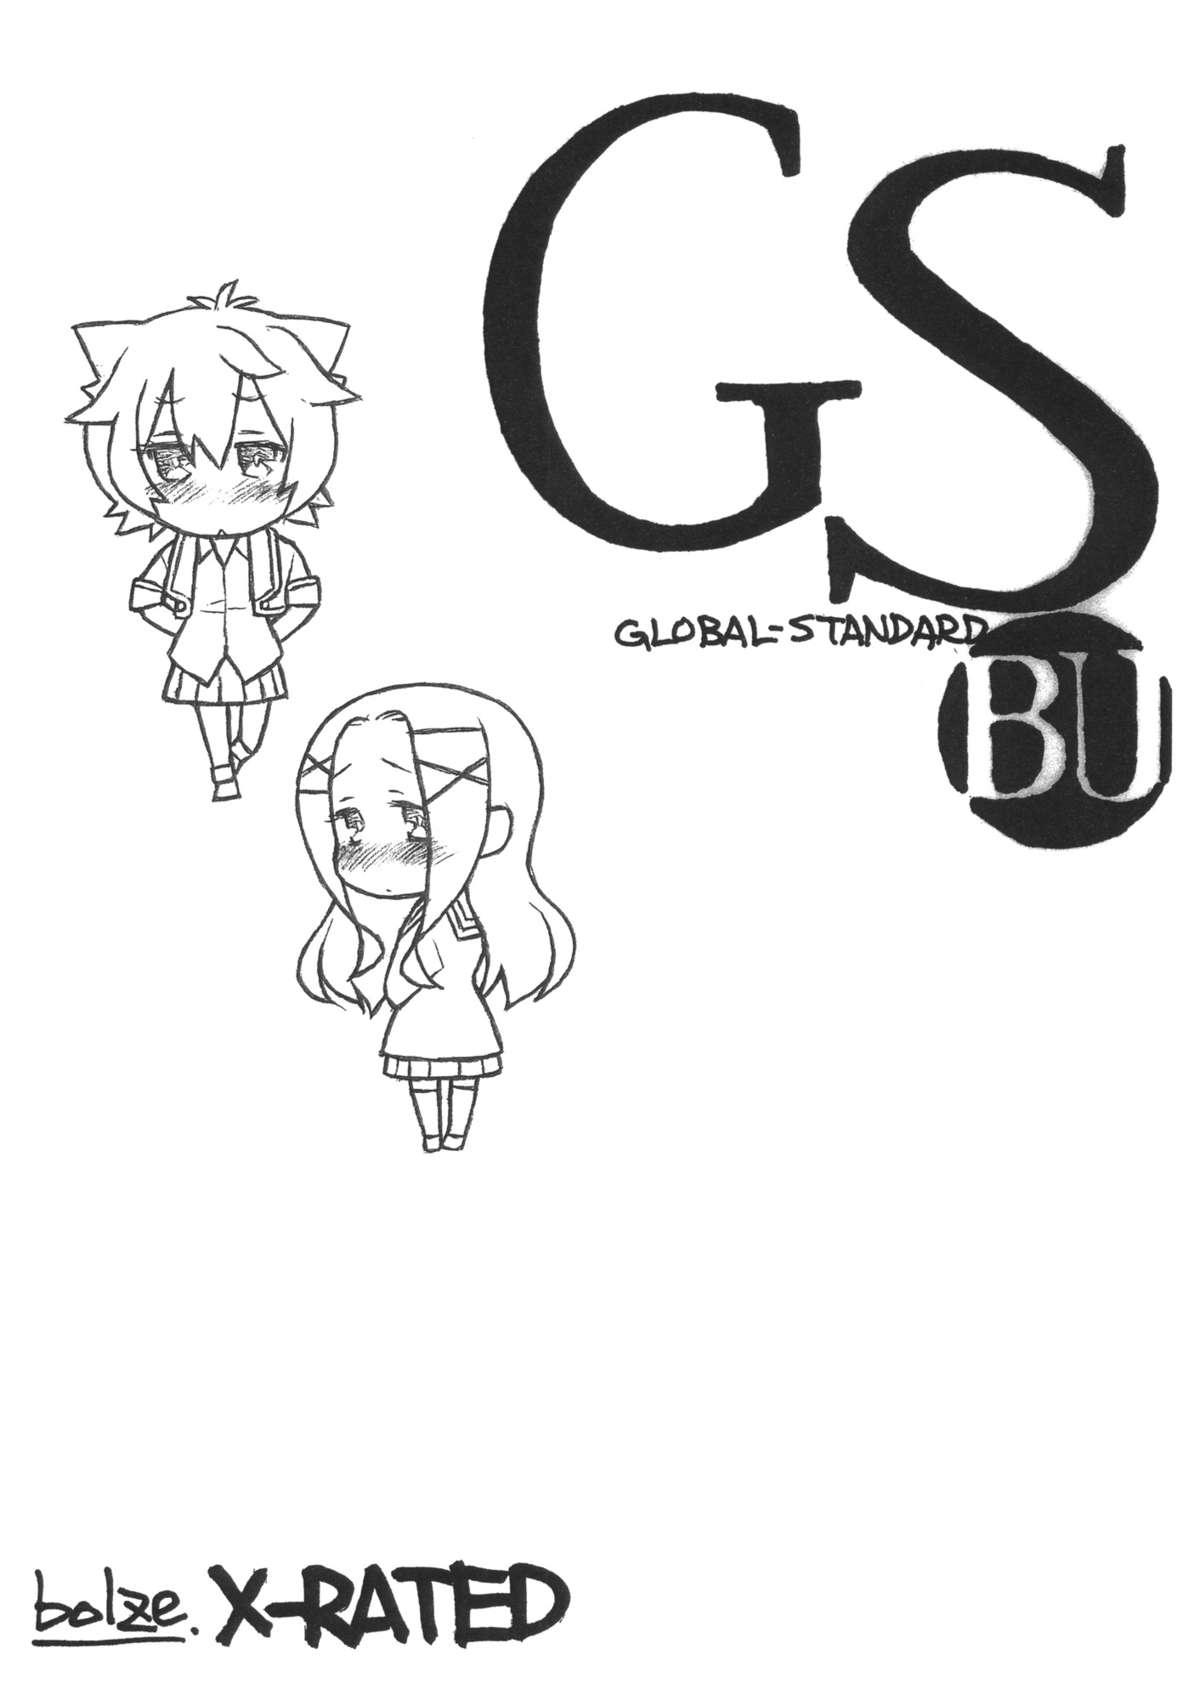 GS-BU 0